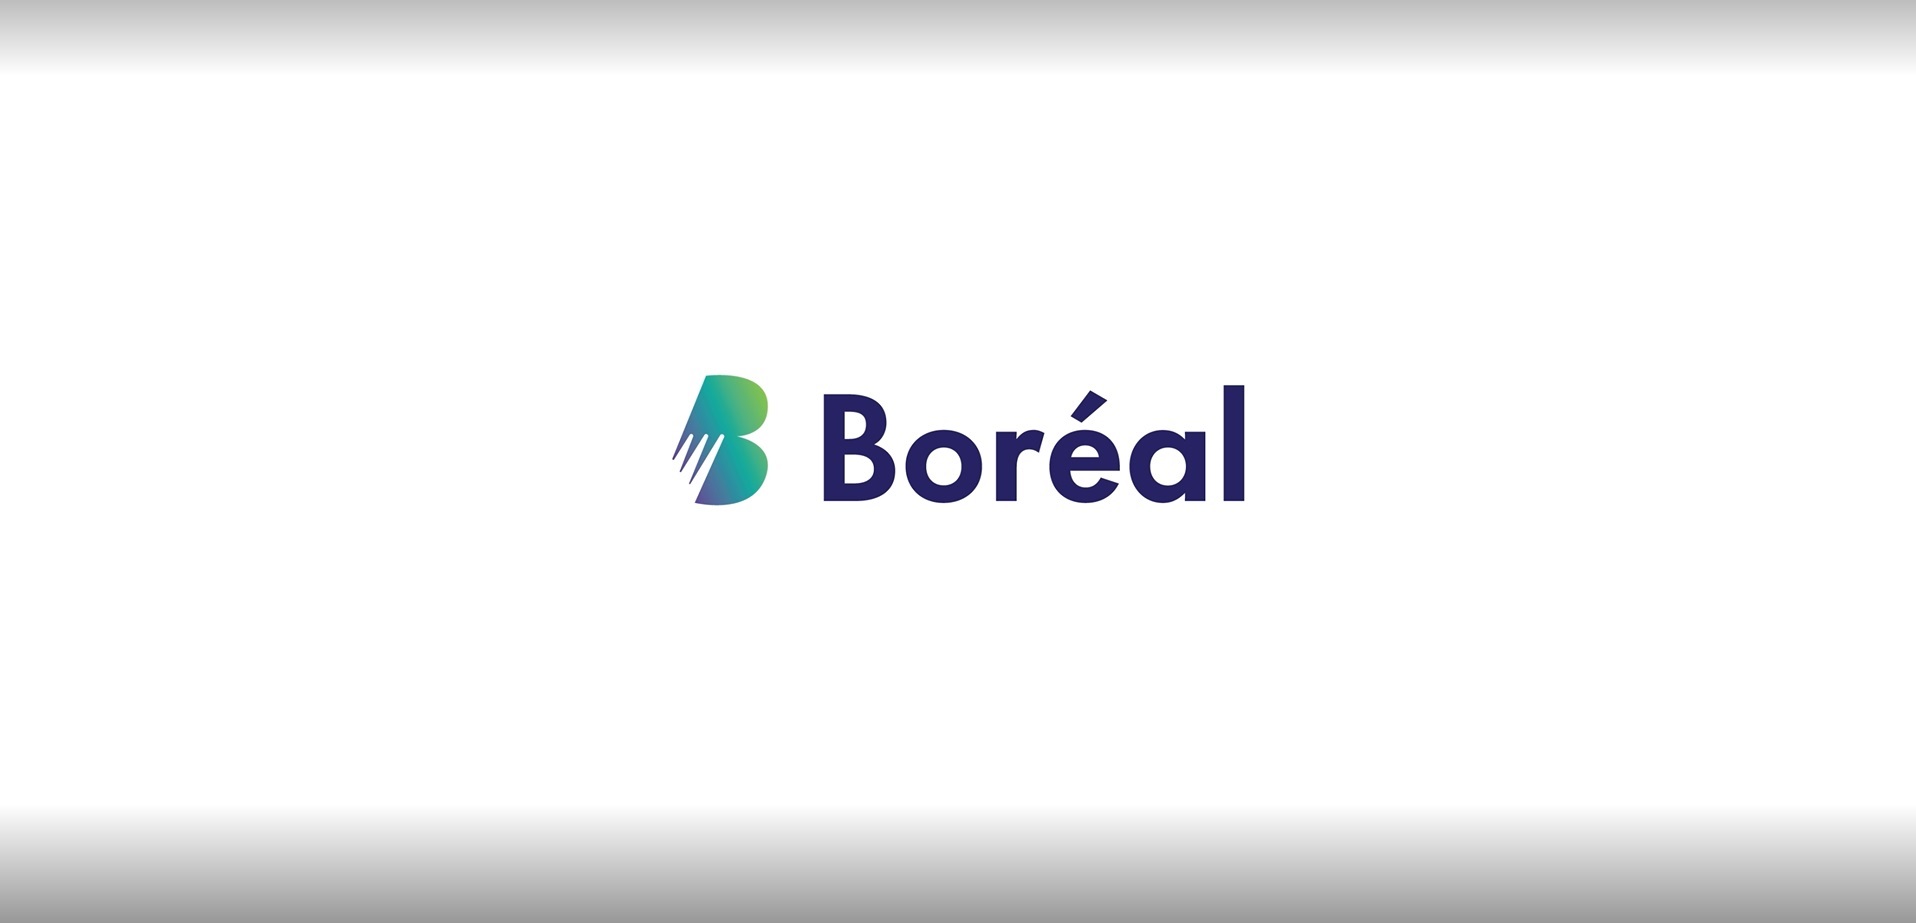 Collège Boréal's new brand image